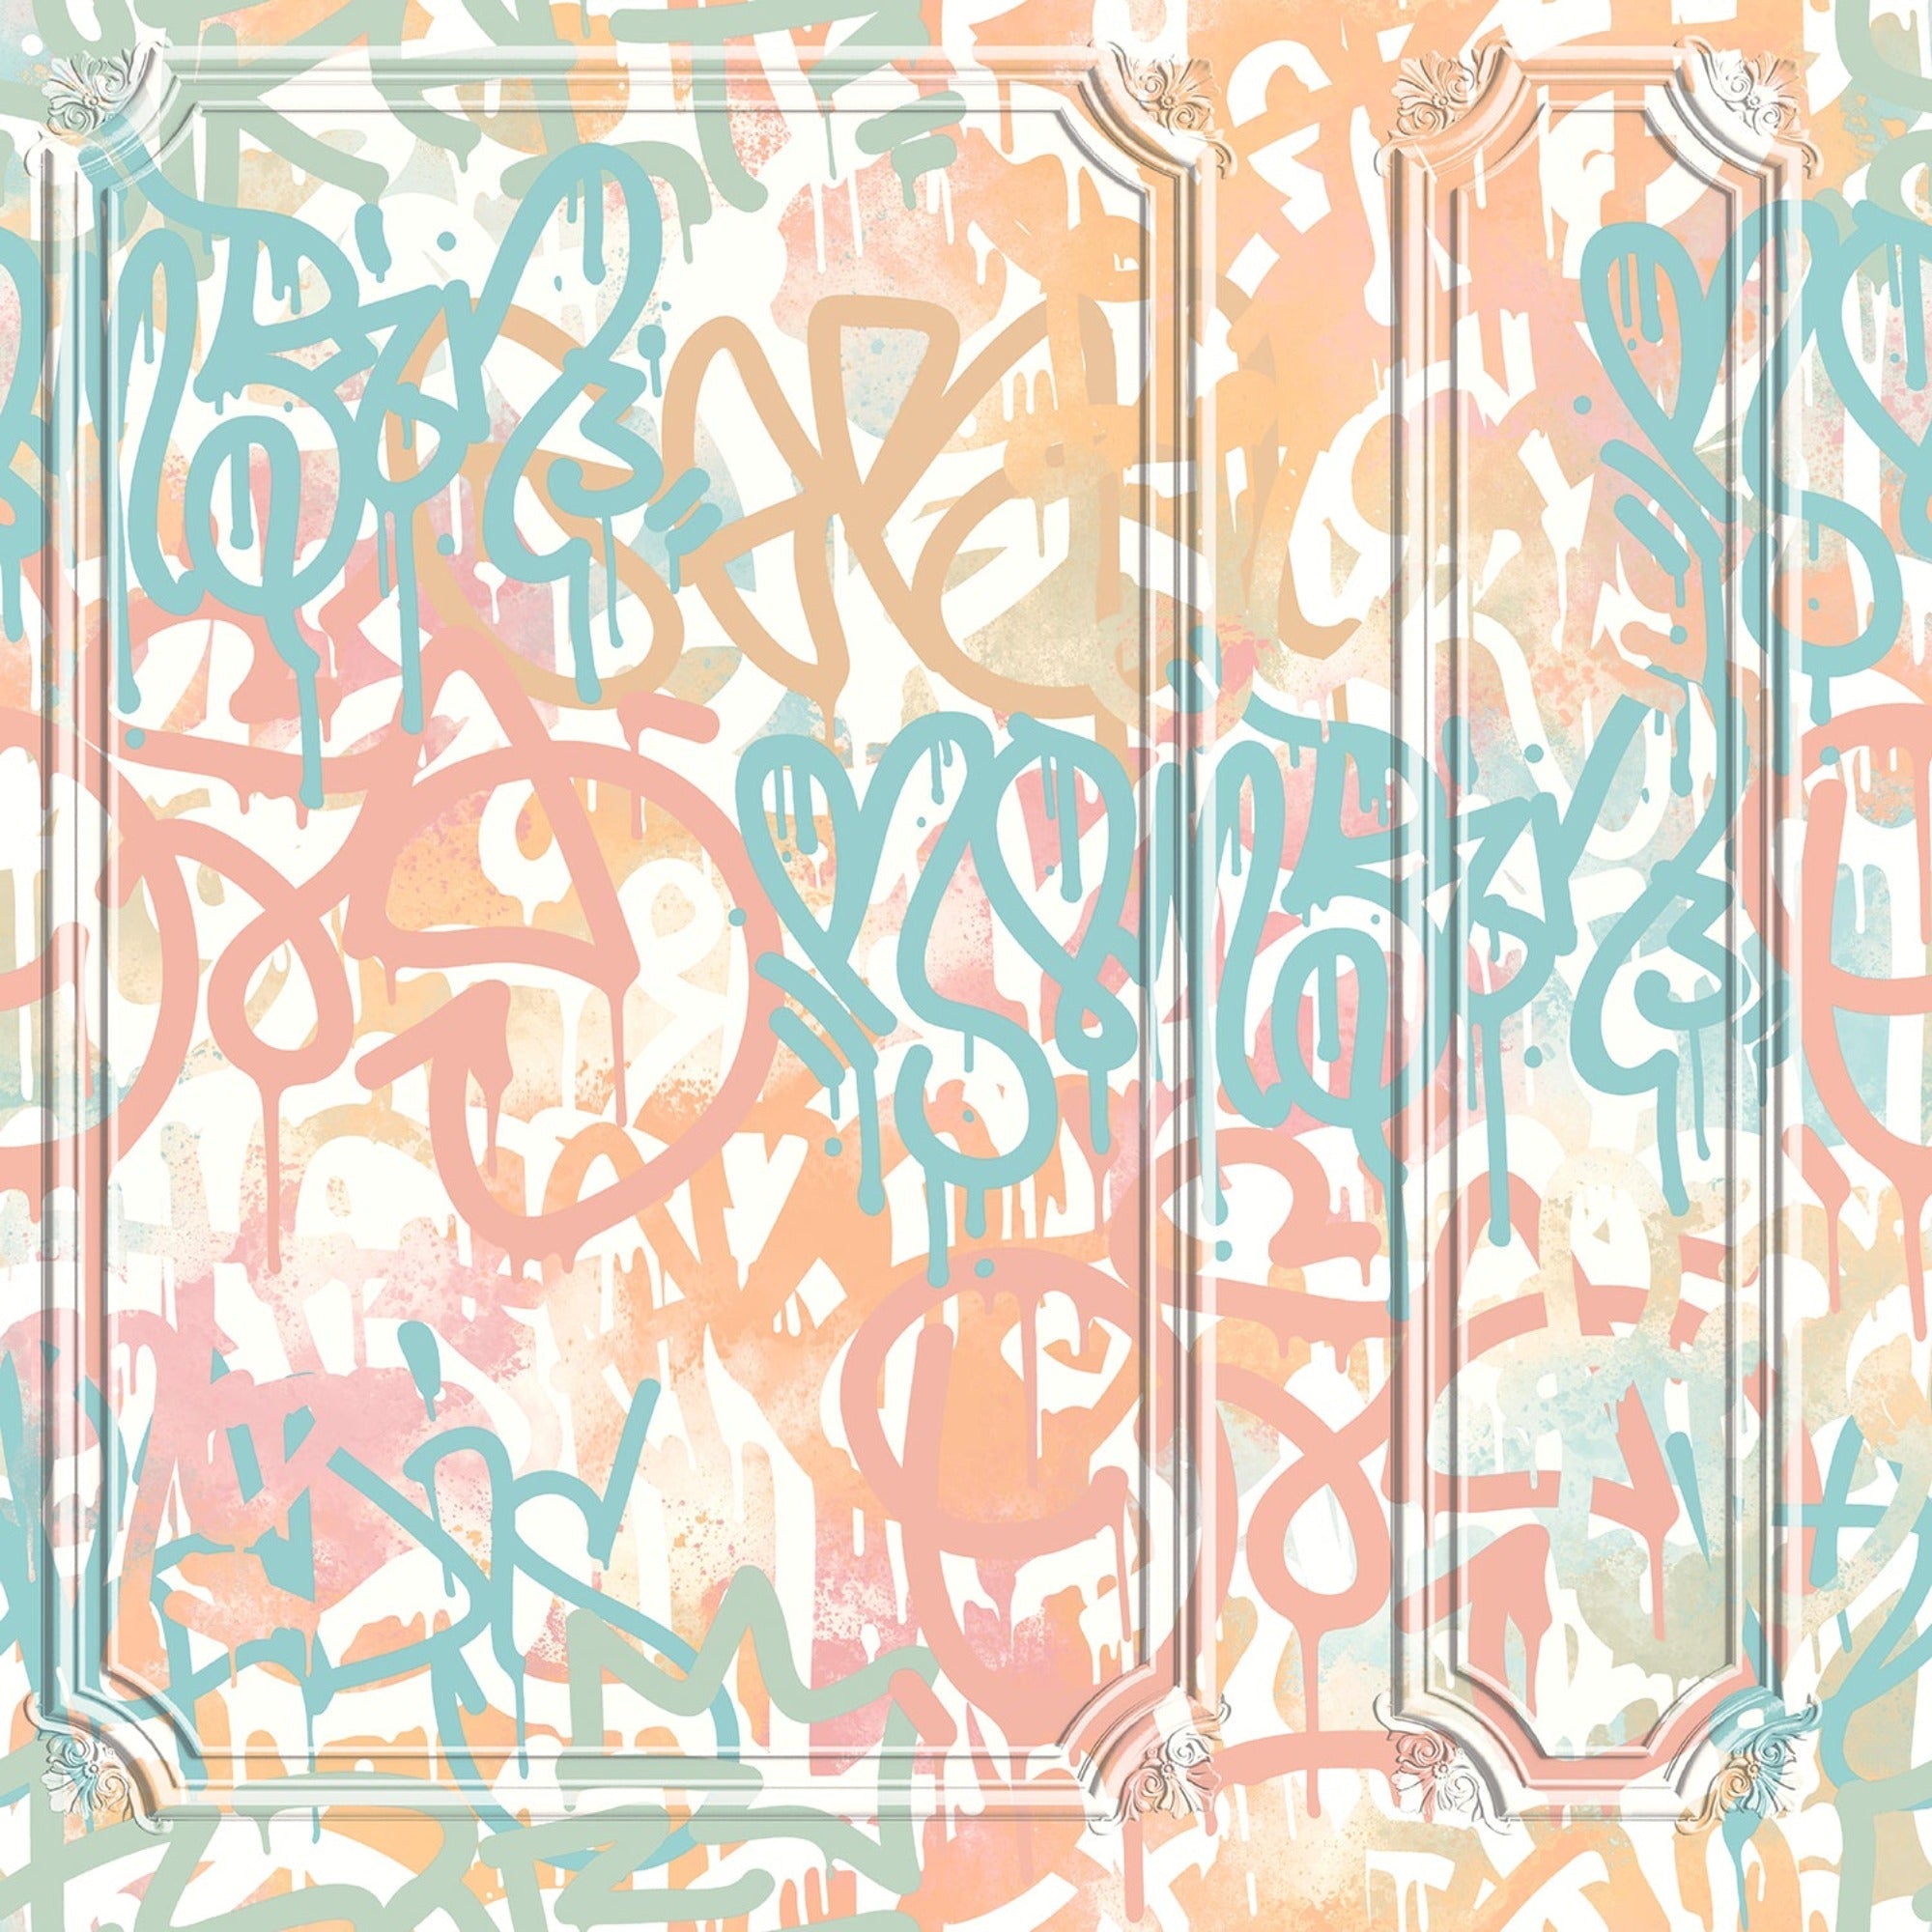 Graffiti Panel Pastel Wallpaper | WonderWall by Nobletts | #Variant SKU# | Ugepa